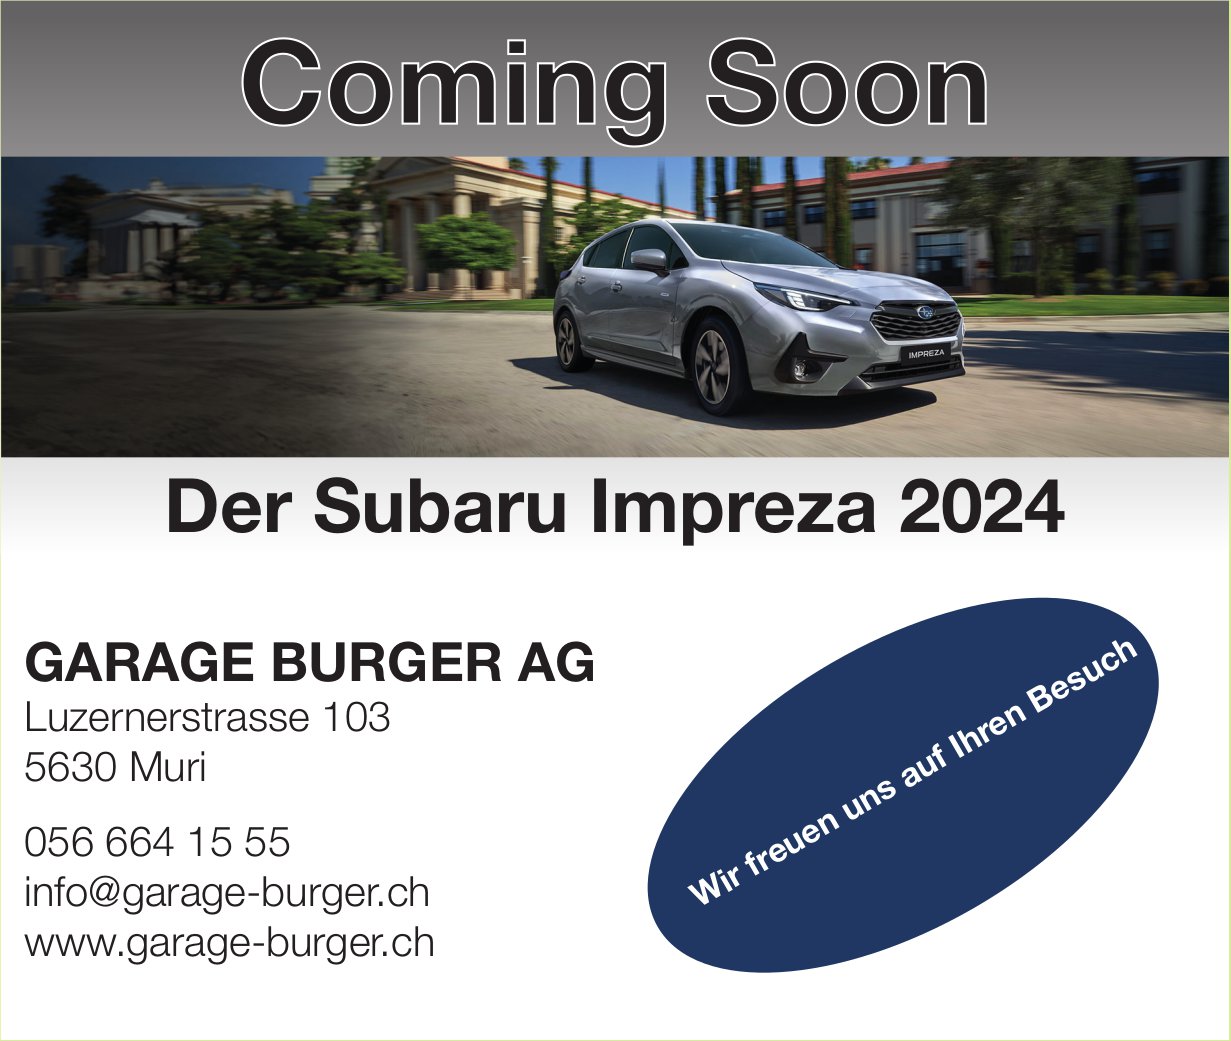 Garage Burger AG, Muri - Coming Soon Der Subaru Impreza